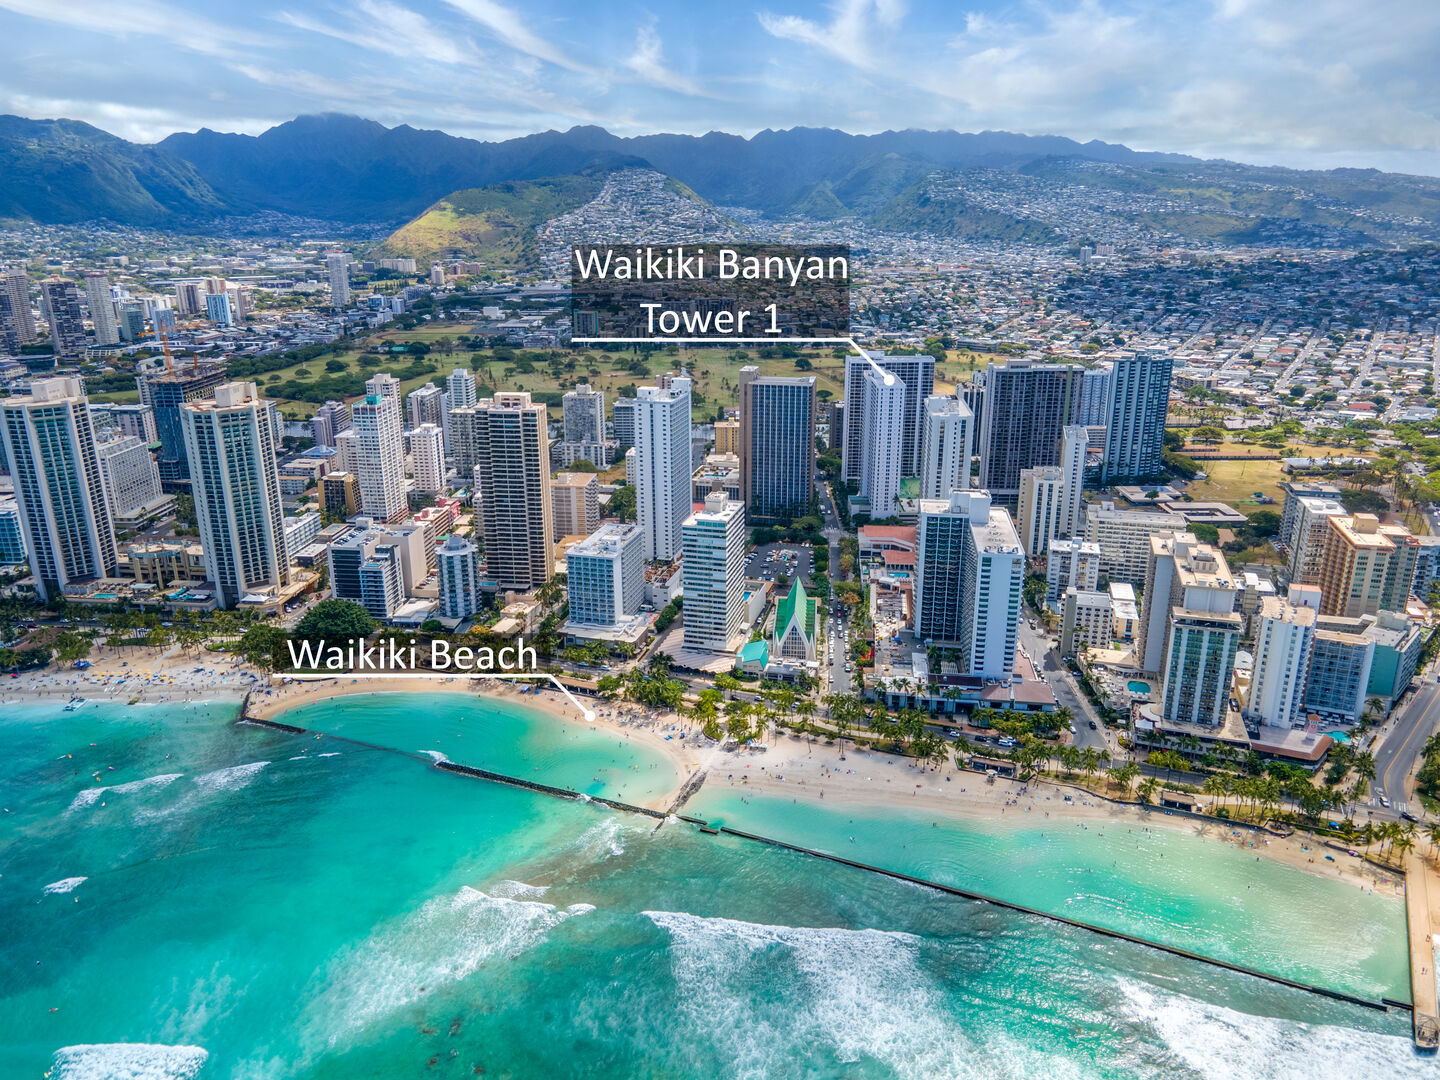 Walking distance to the famous Waikiki Beach